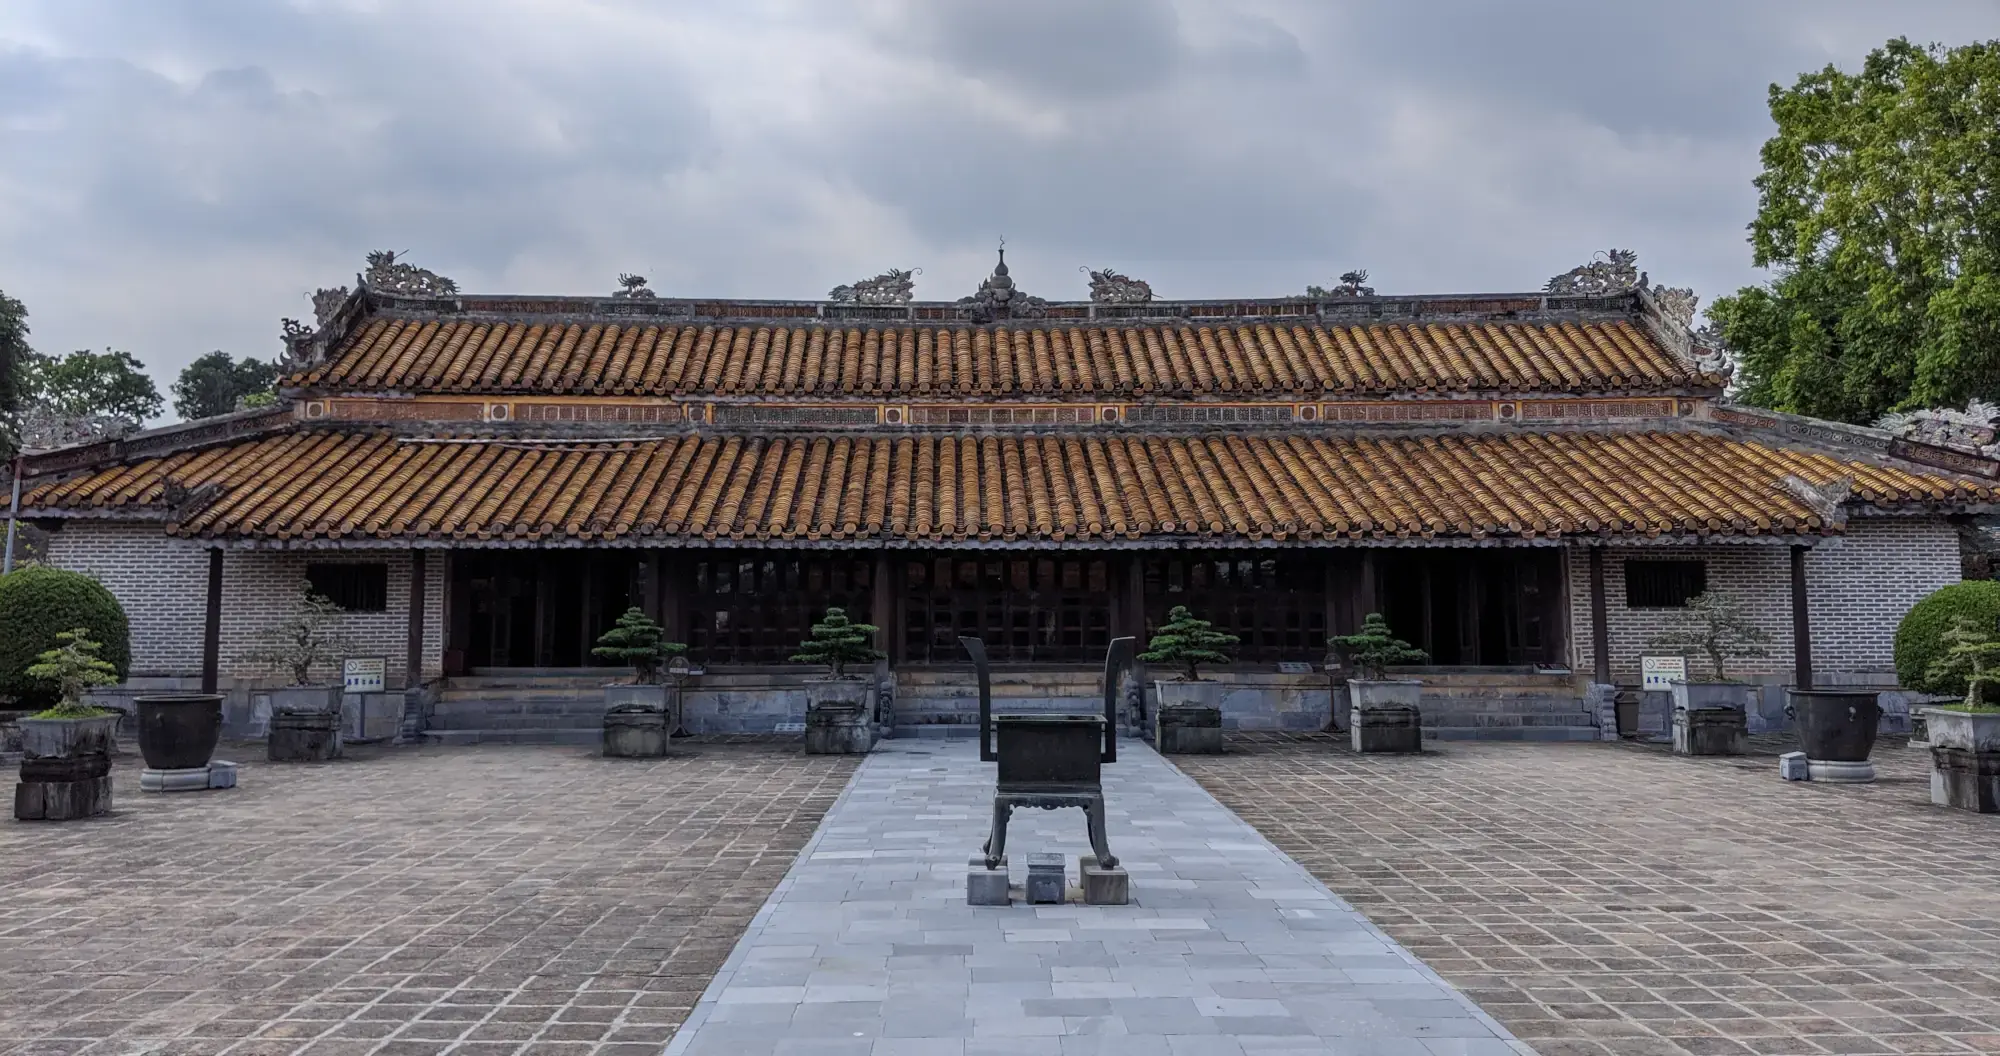 Tu Duc tomb - Hoa Khiem palace